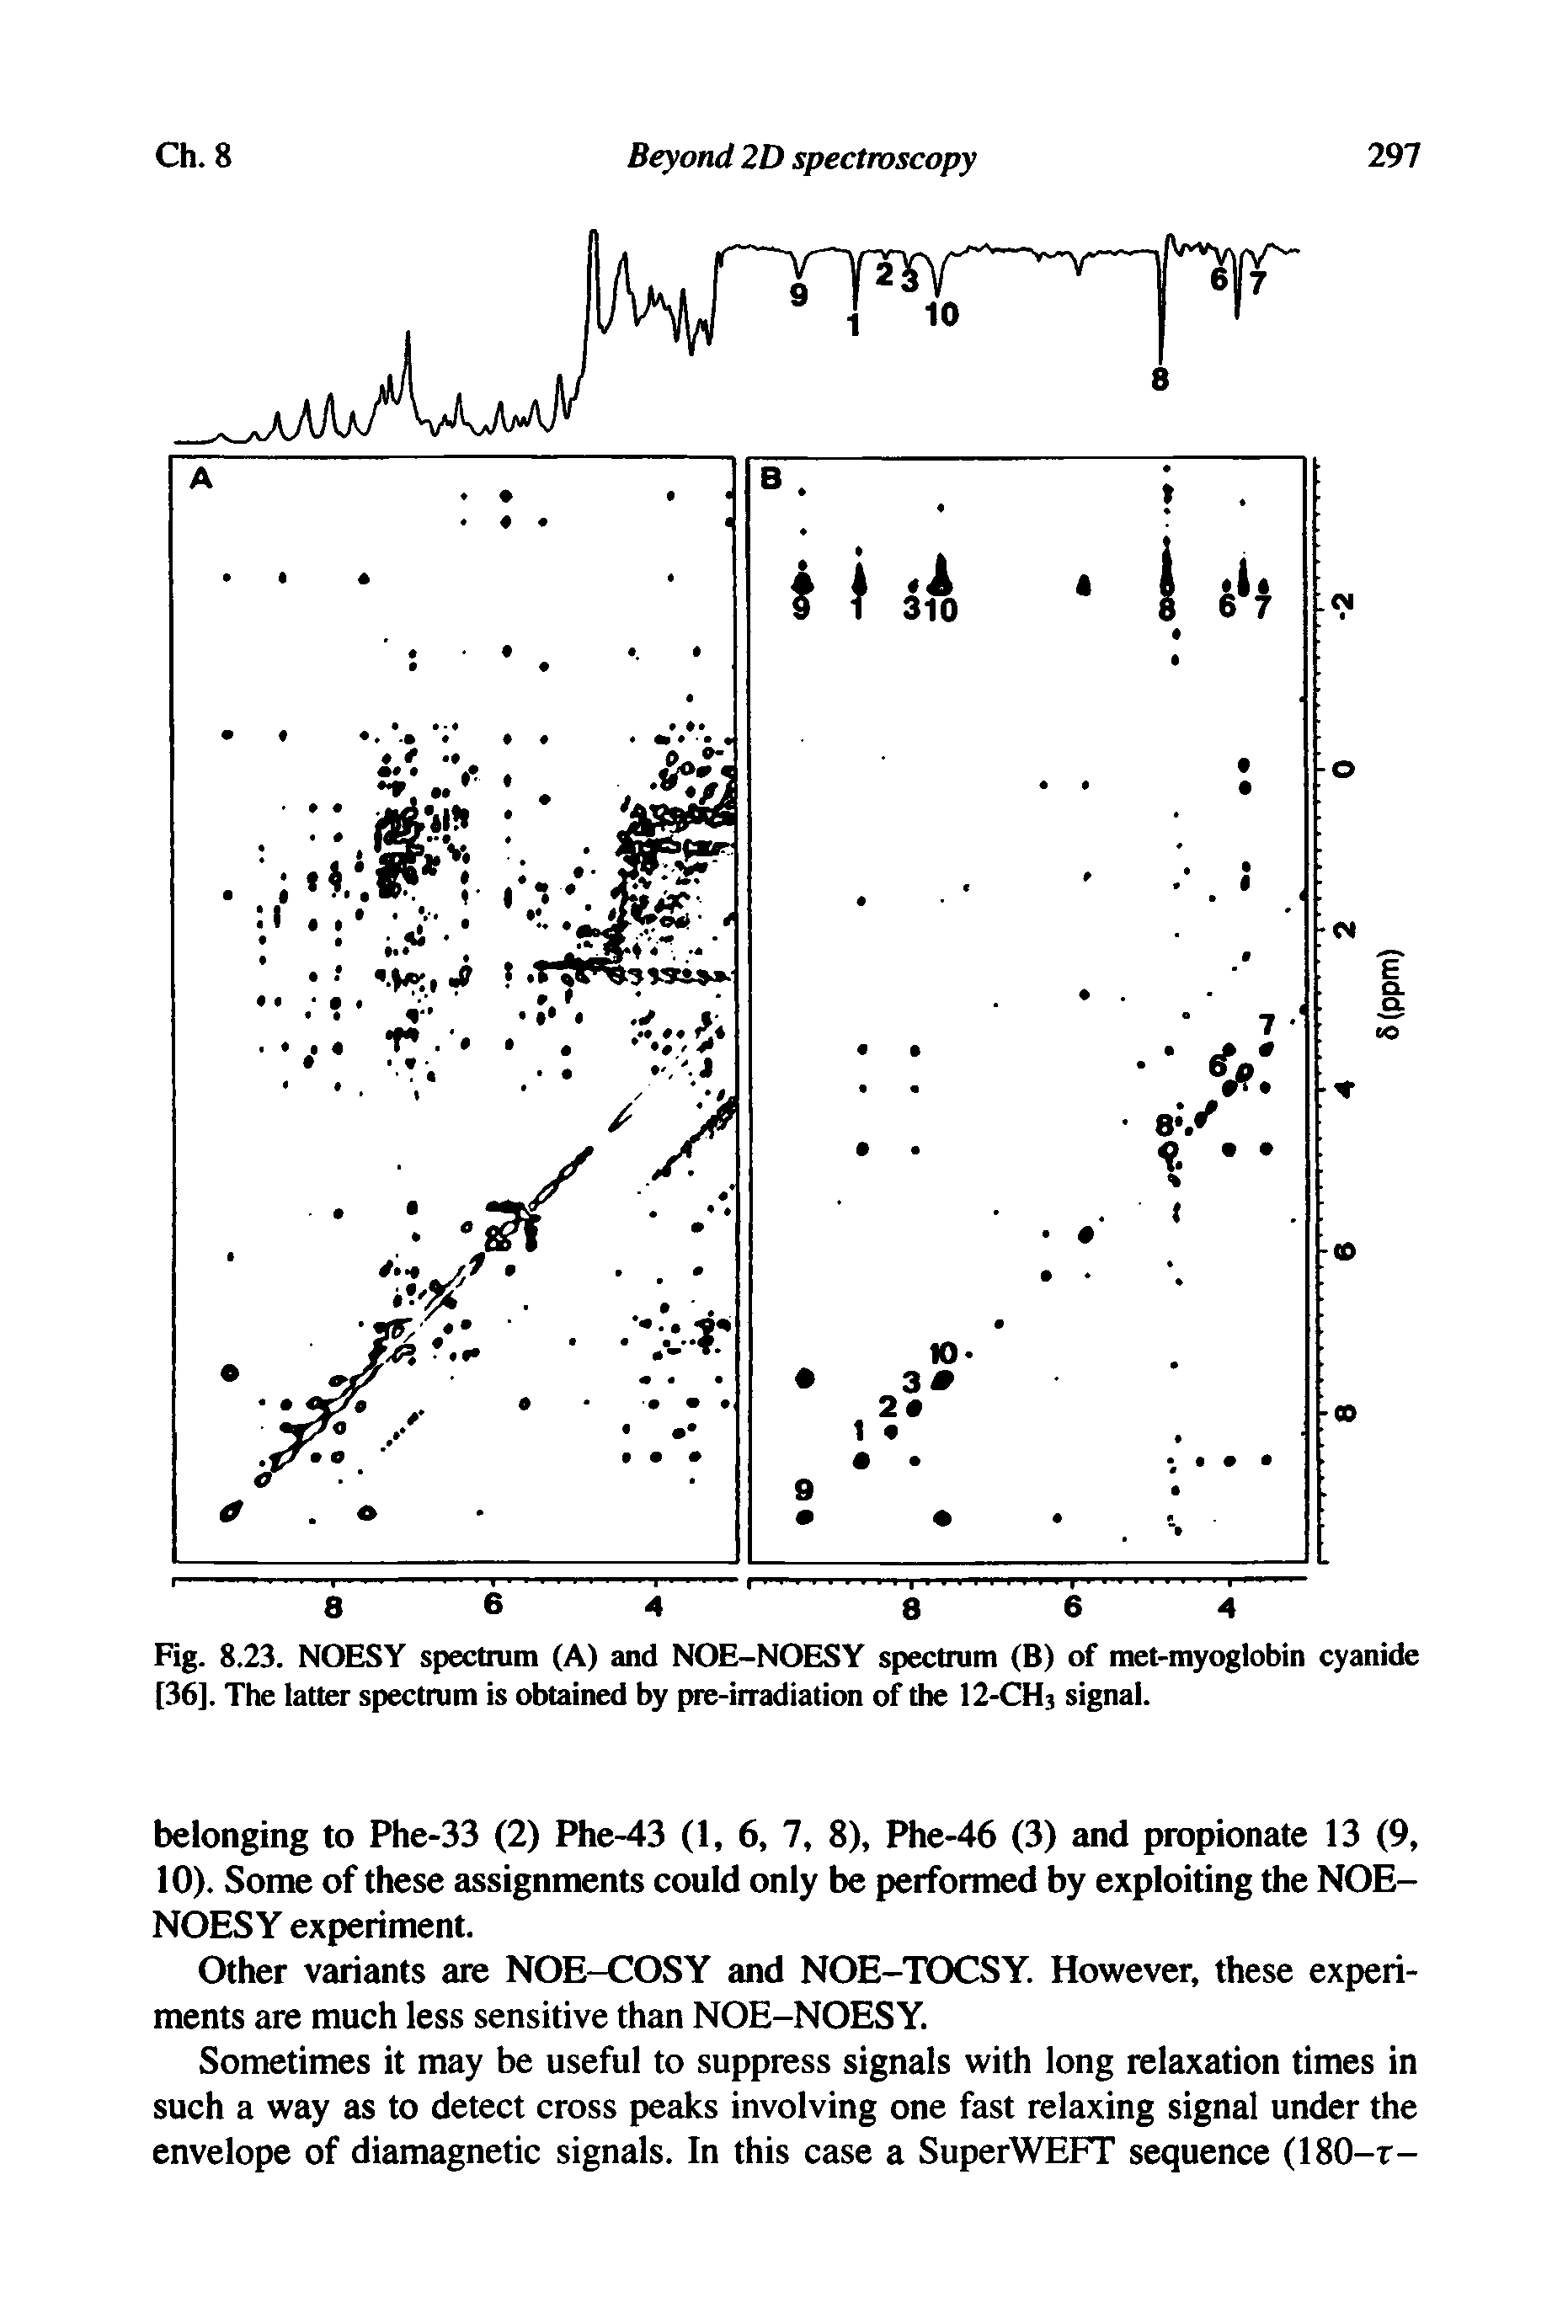 Fig. 8.23. NOESY spectrum (A) and NOE-NOESY spectrum (B) of met-myoglobin cyanide [36], The latter spectrum is obtained by pre-irradiation of the I2-CH3 signal.